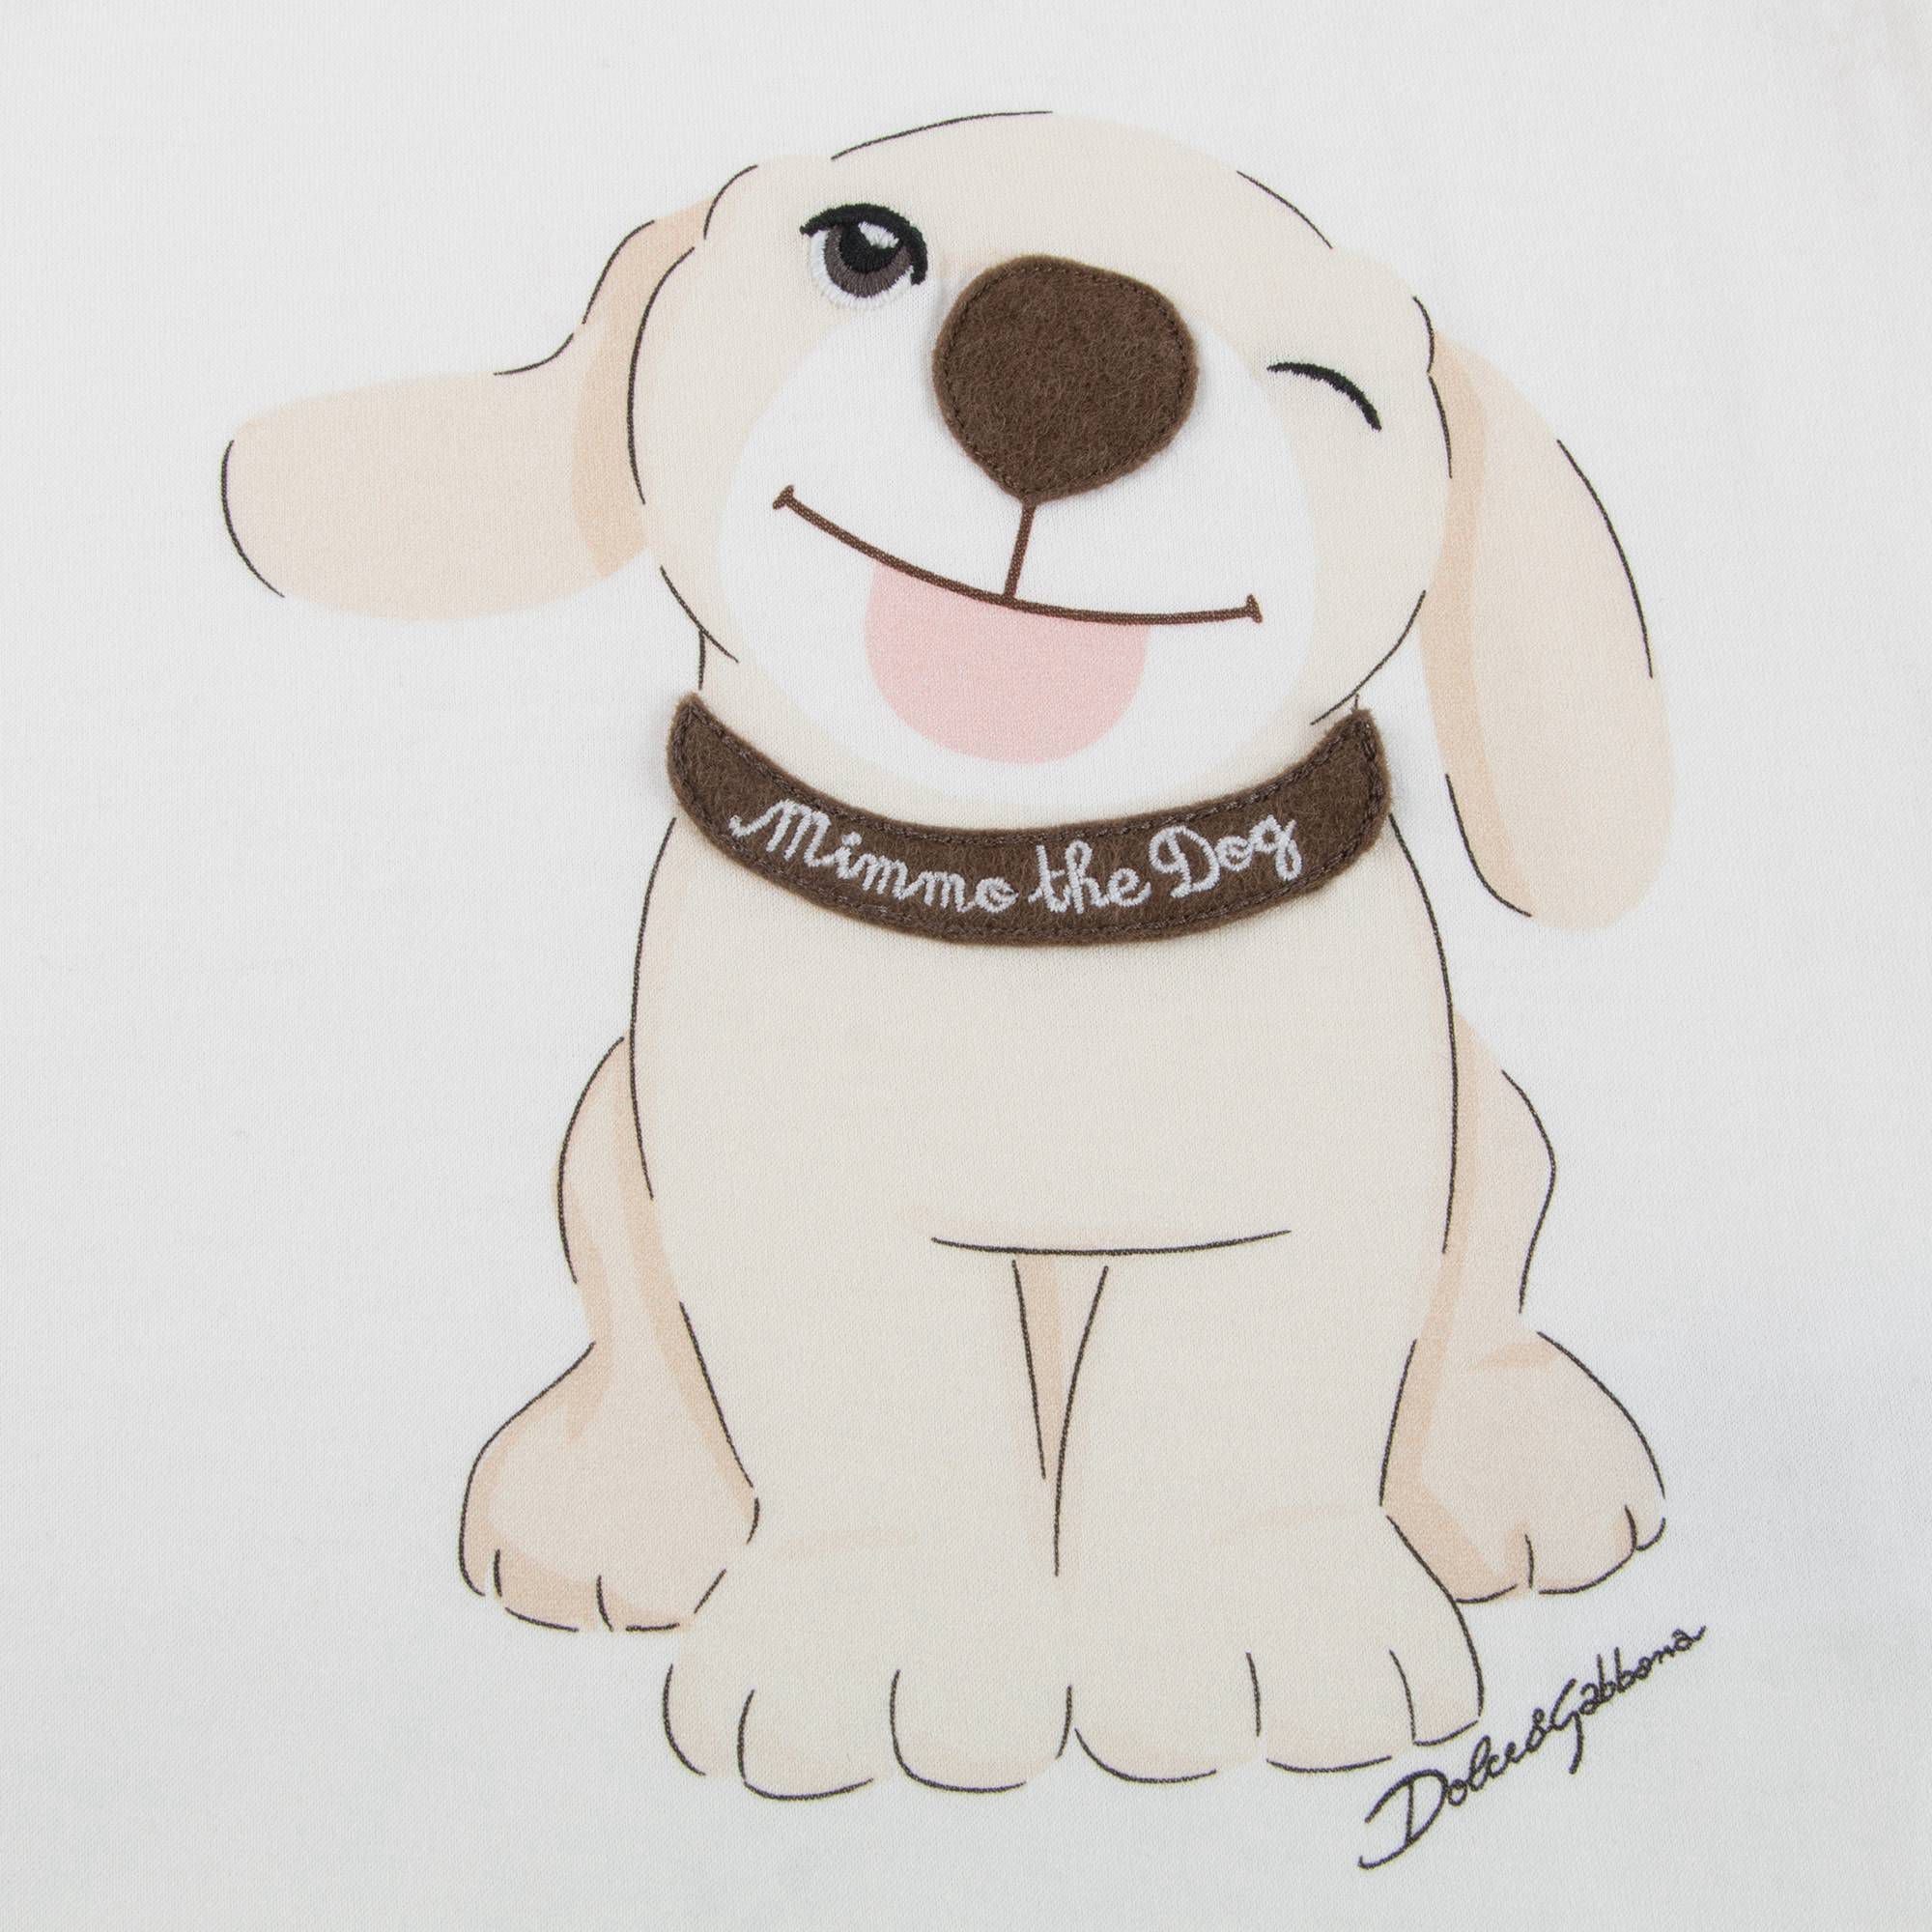 Baby Ivory Dog Printed T-shirt